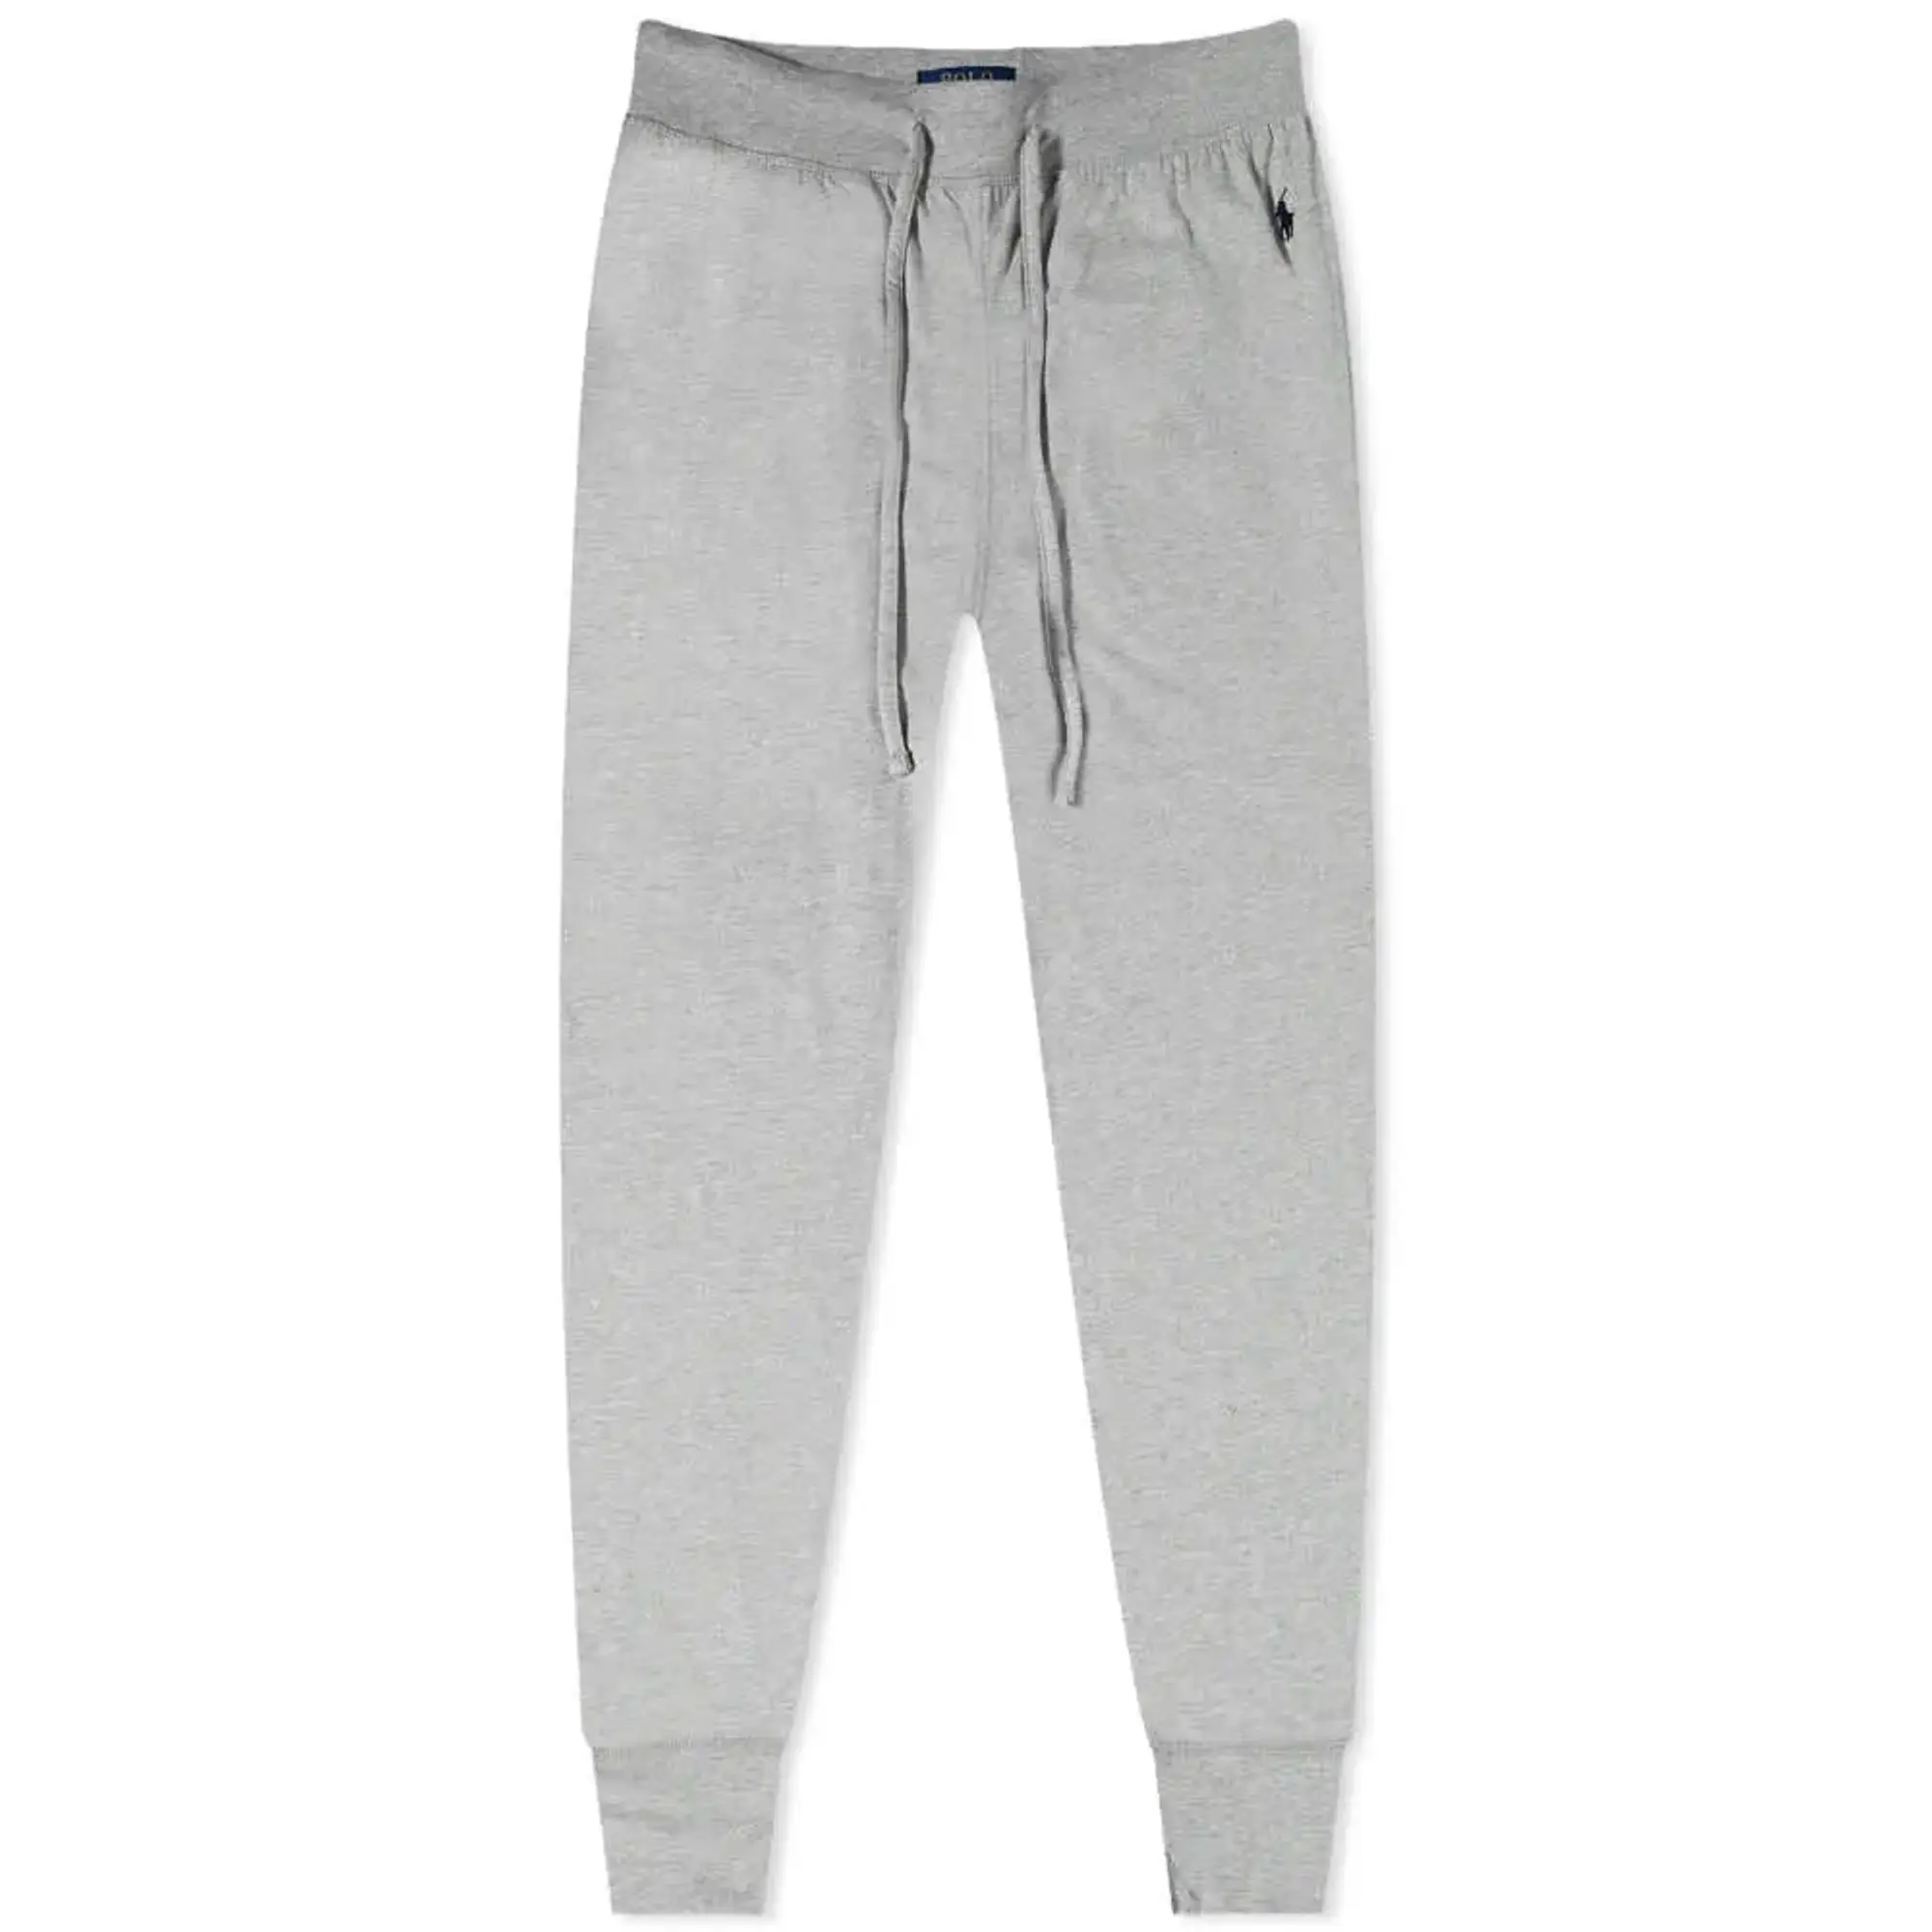 Polo Ralph Lauren Lightweight Cuffed Lounge Pants - Grey, Grey